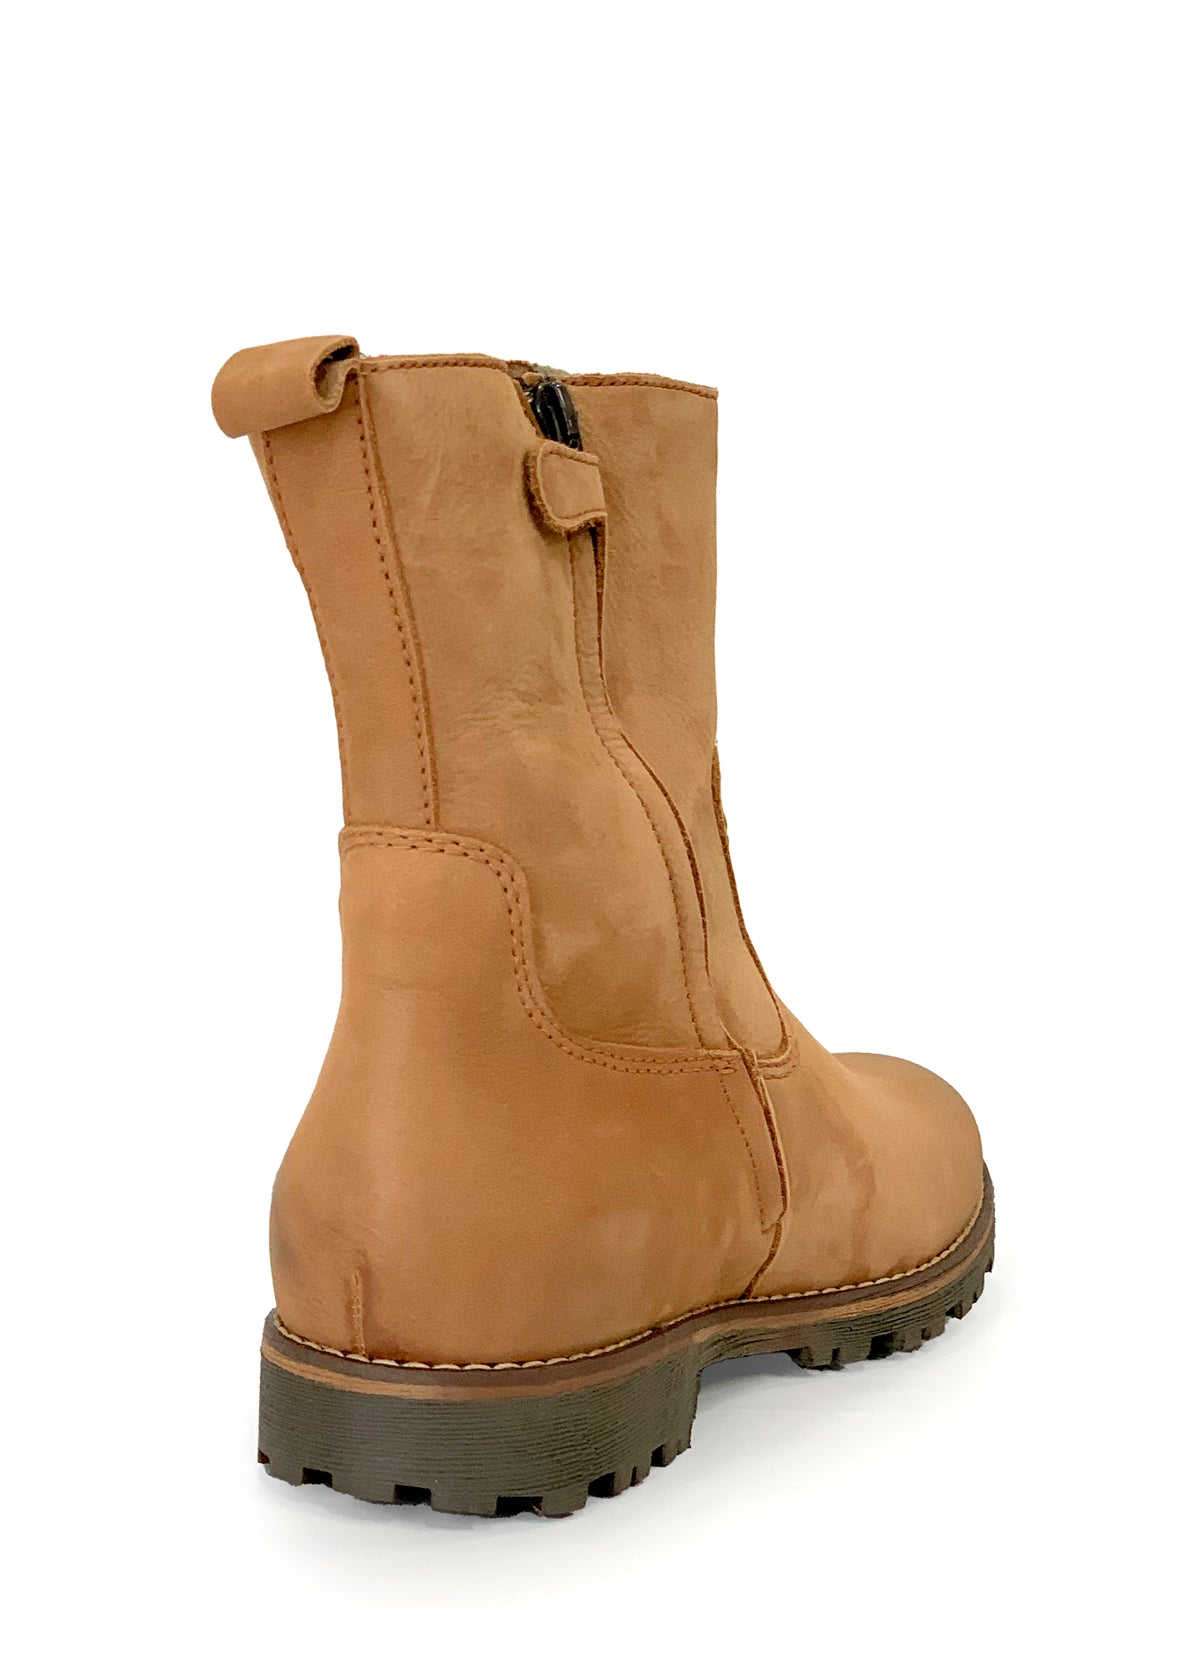 Winter boots - cognac brown, buckle decoration, Froddo-TEX